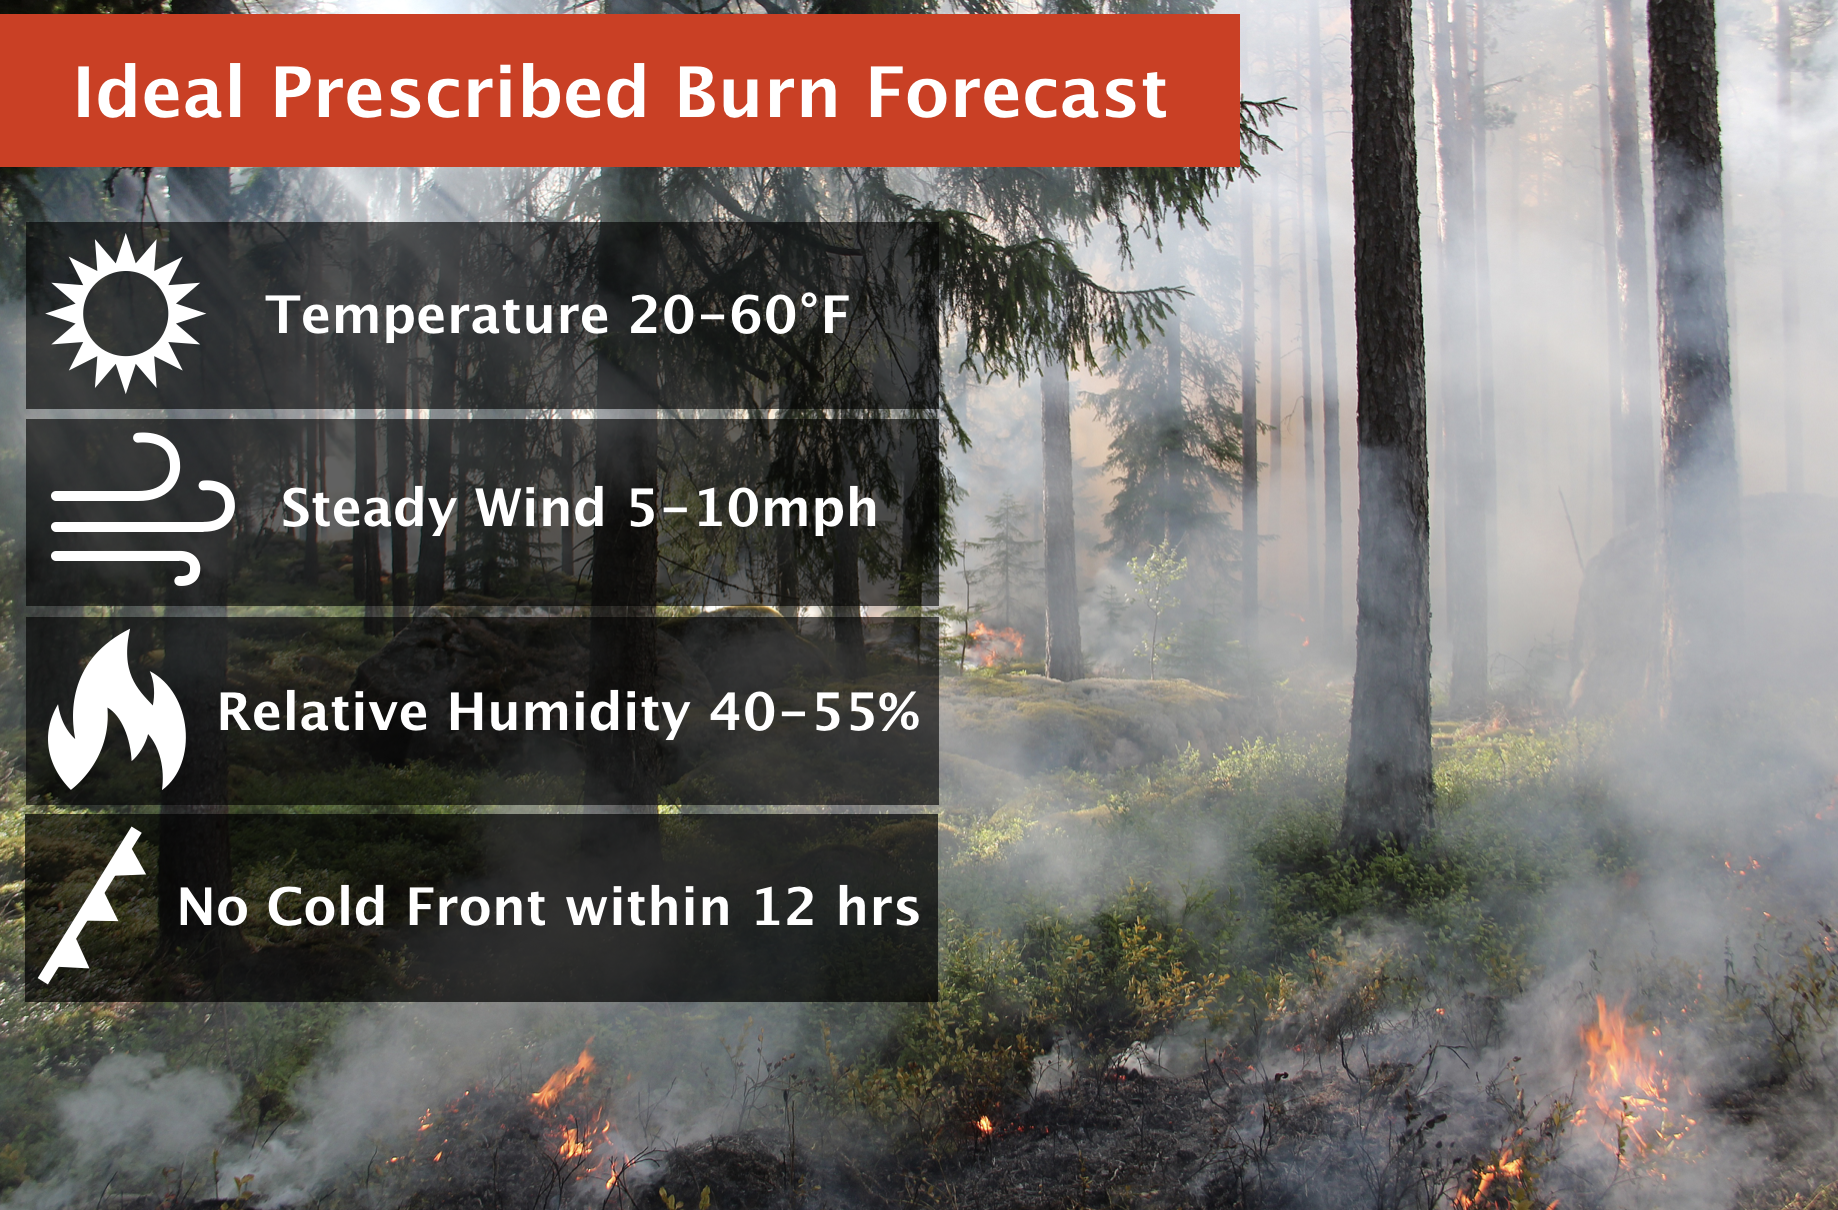 Ideal Prescribed Burn Forecast Conditions